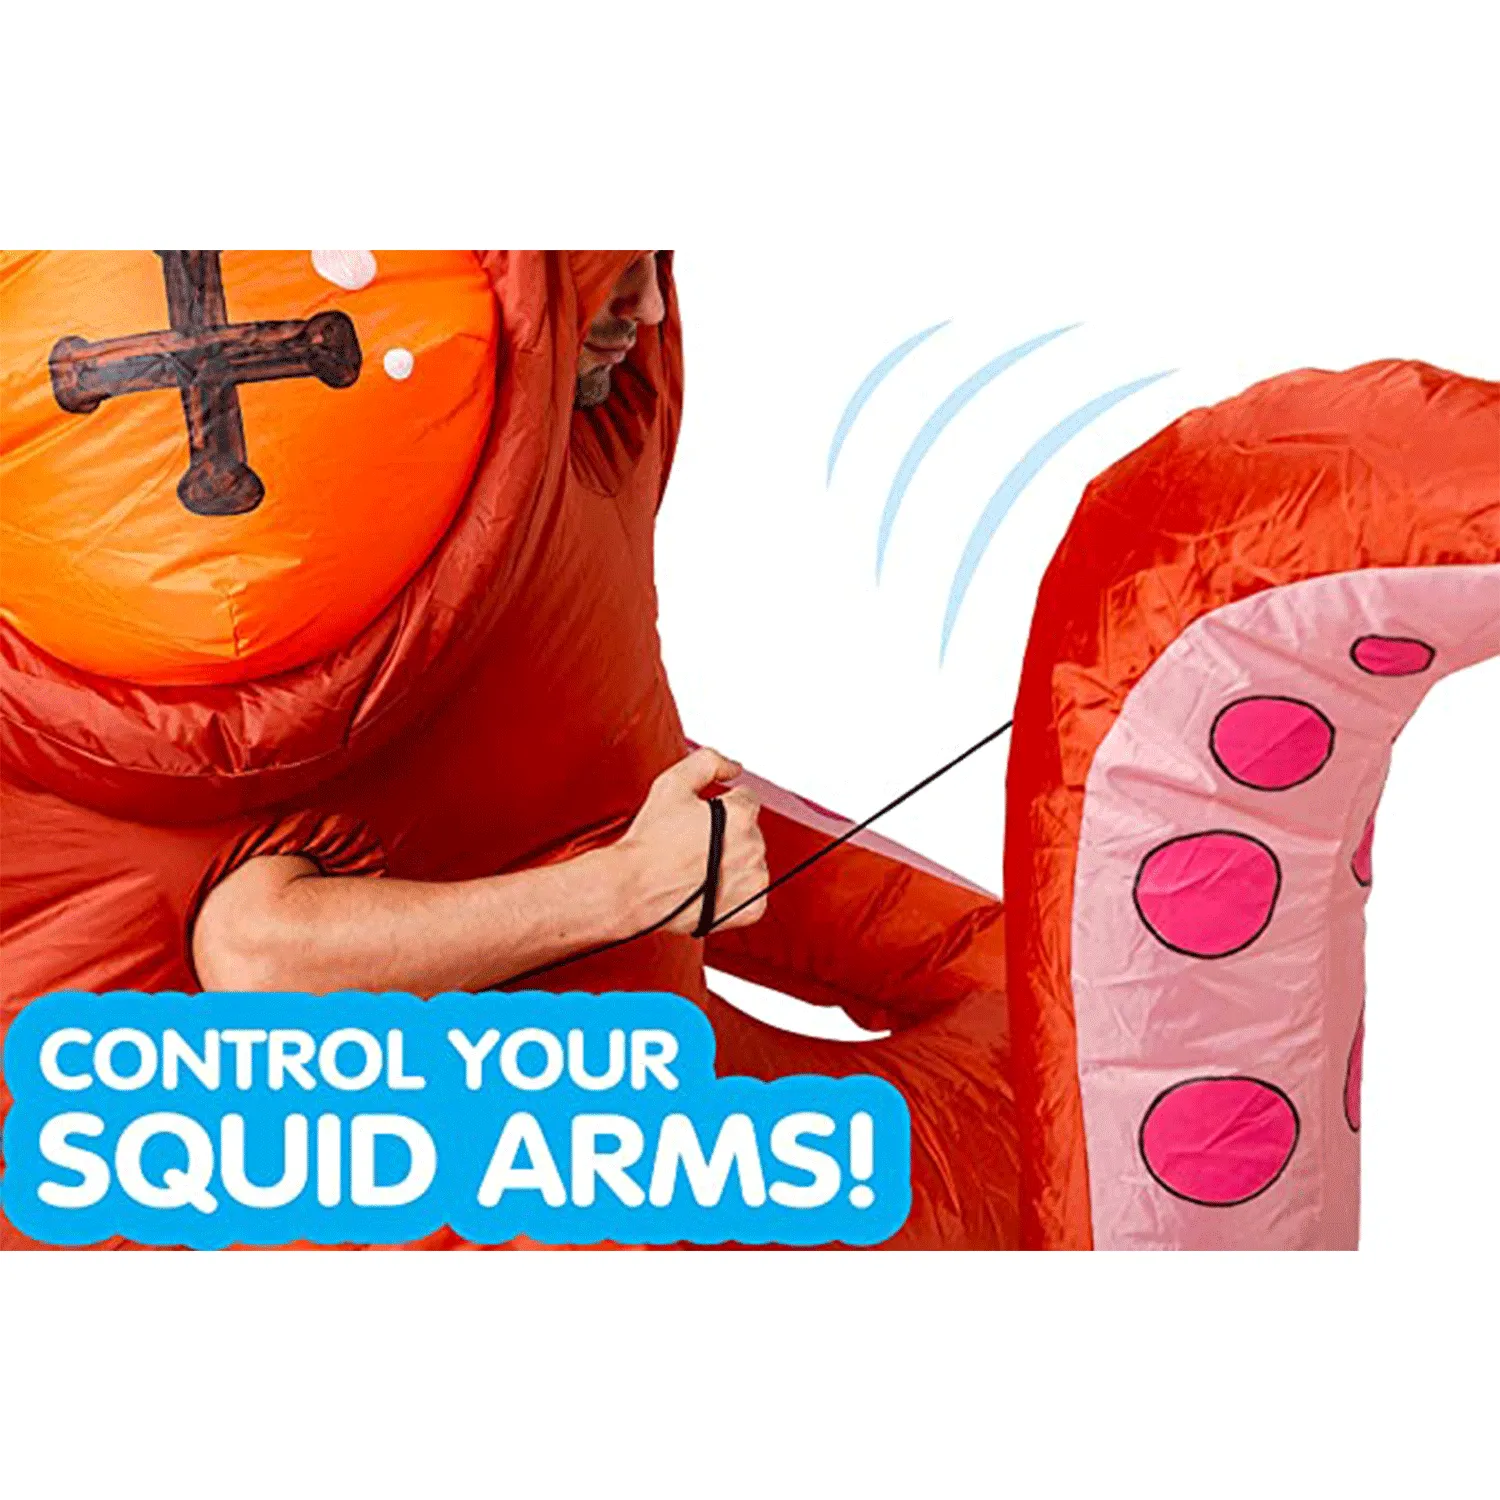 Adult Inflatable Giant Squid Halloween Costume